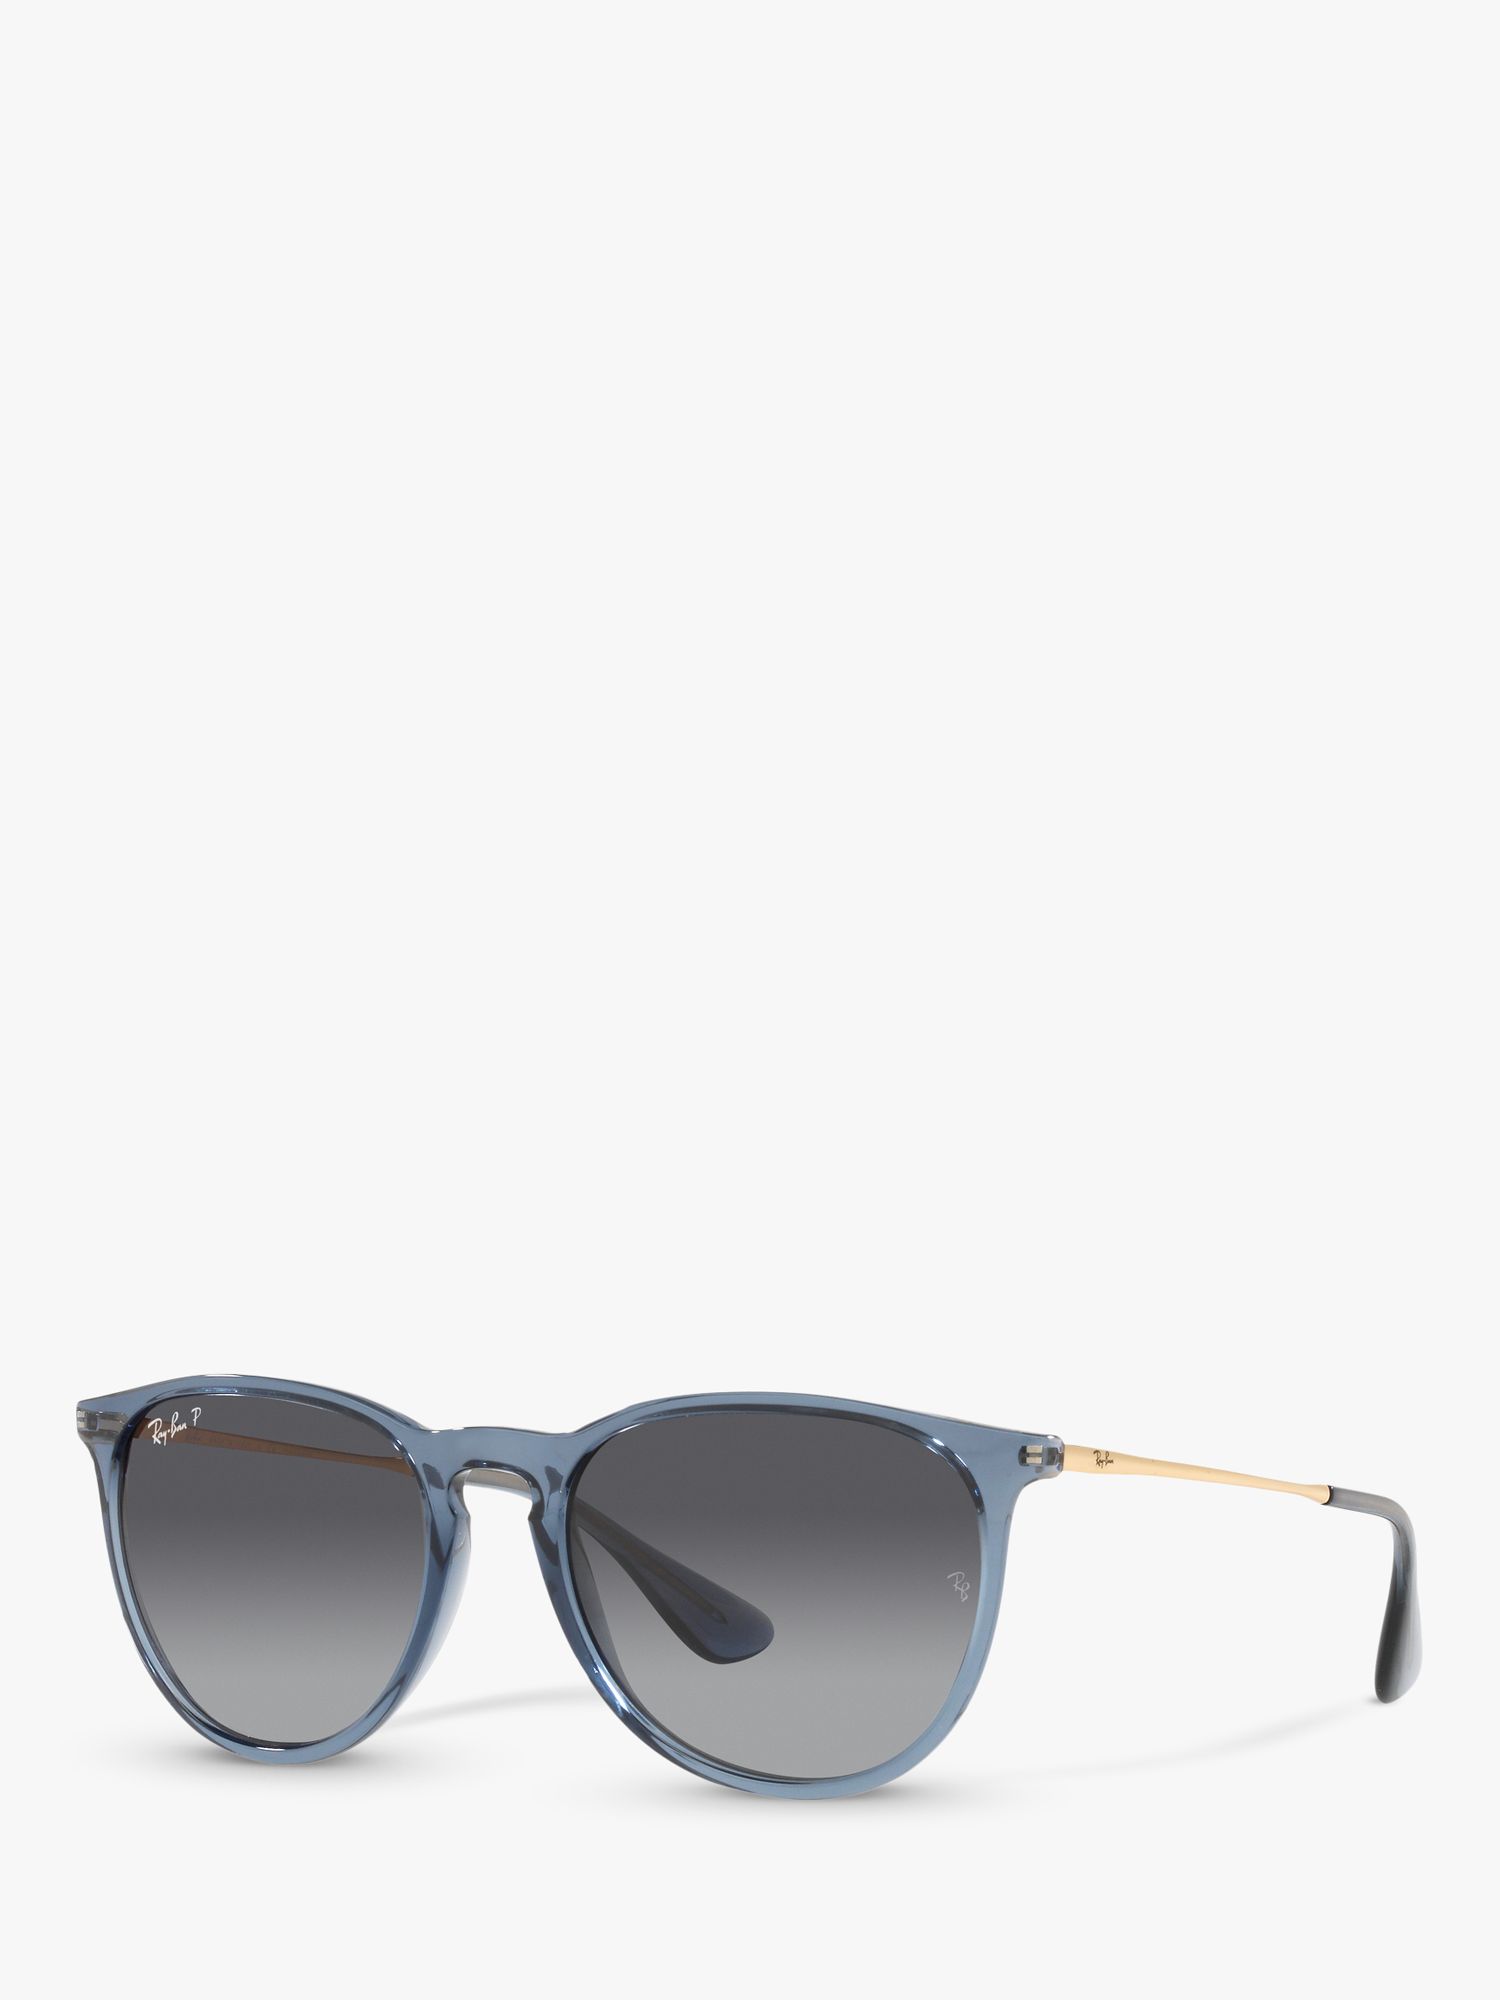 Ray-Ban RB4171 Women's Erika Polarised Oval Sunglasses, Transparent Blue/Grey  Gradient at John Lewis & Partners